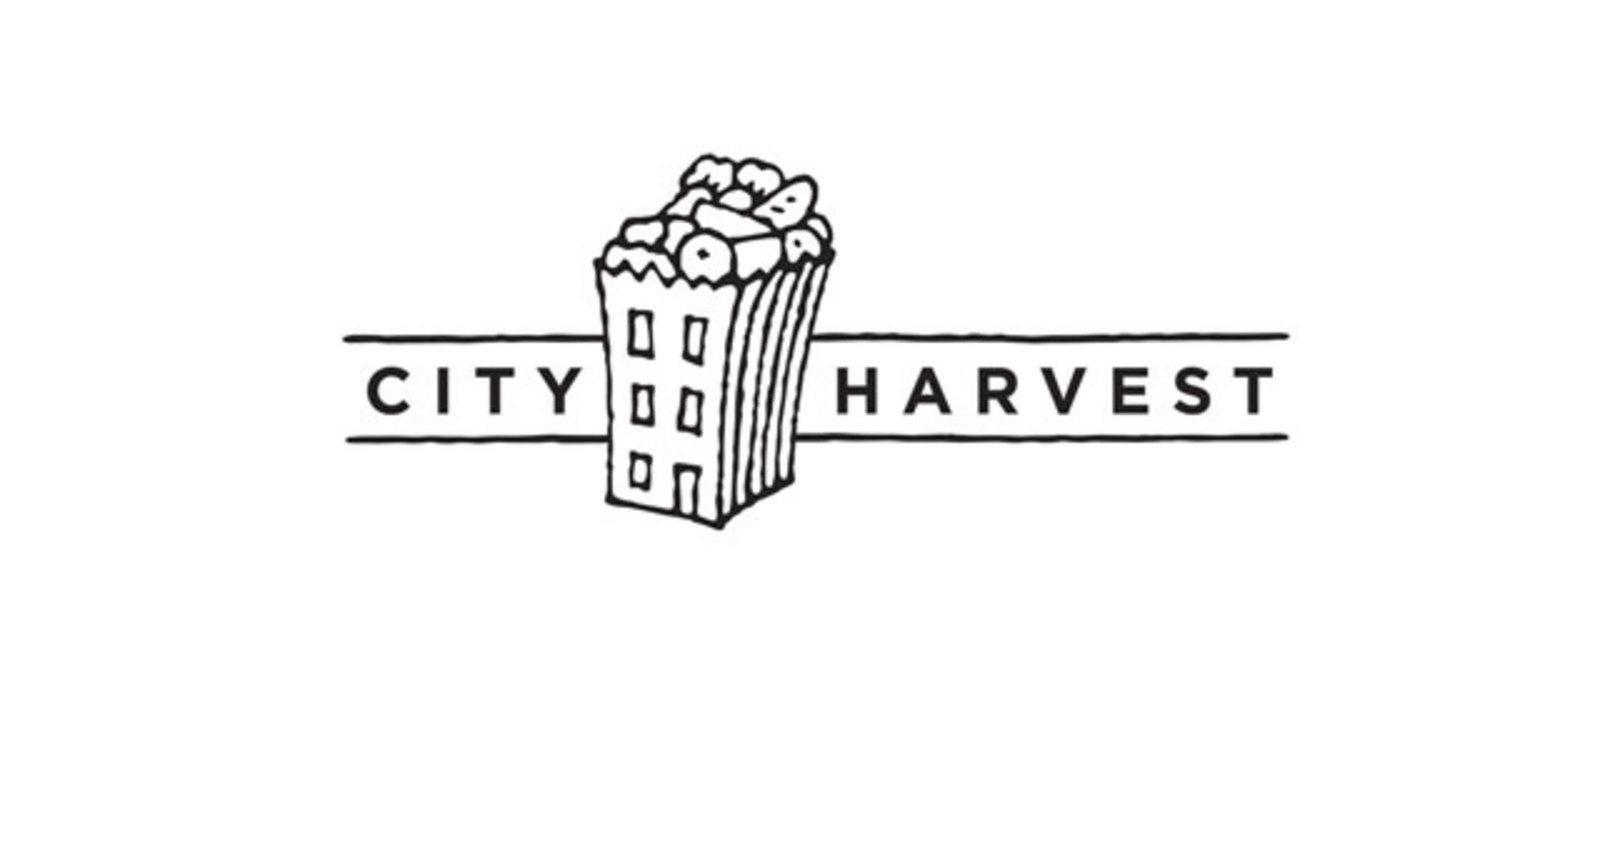 DanLehman_city_harvest_logo